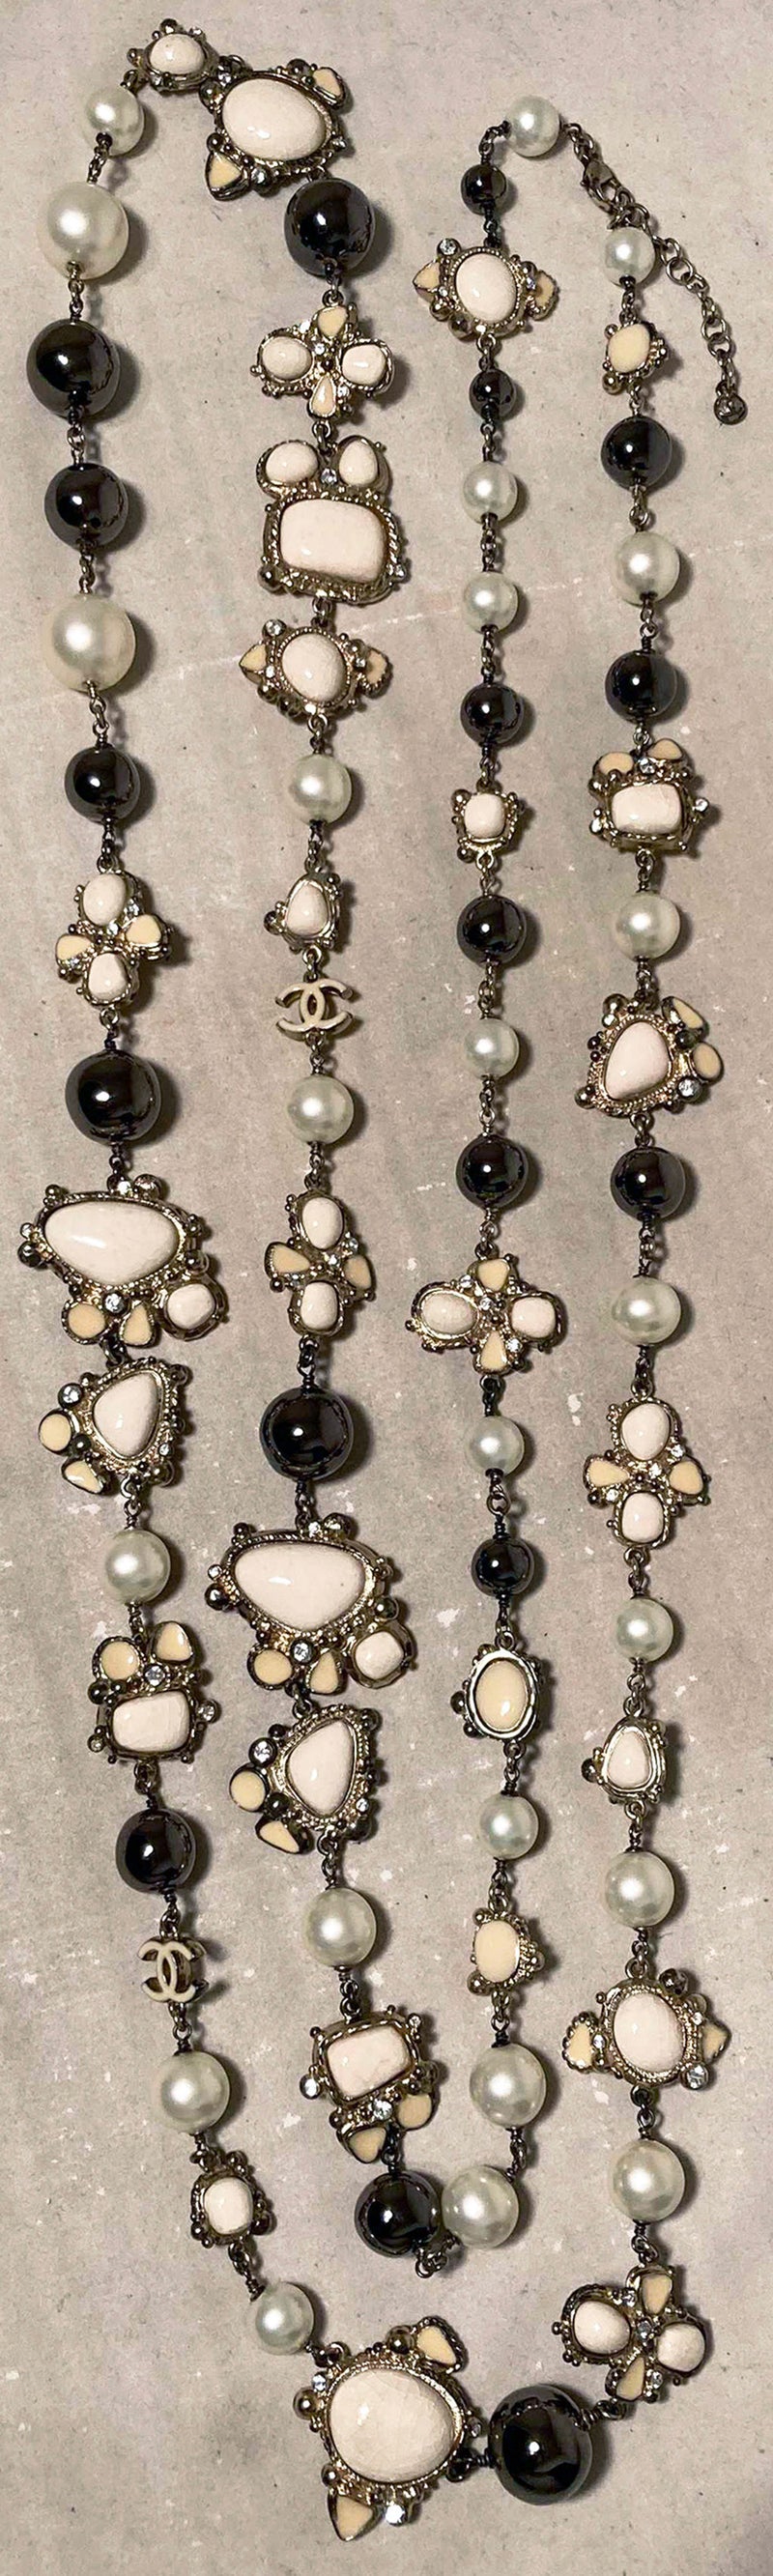 Chanel Silver & Faux Pearl 'CC' Necklace Q6JCEU28VB008